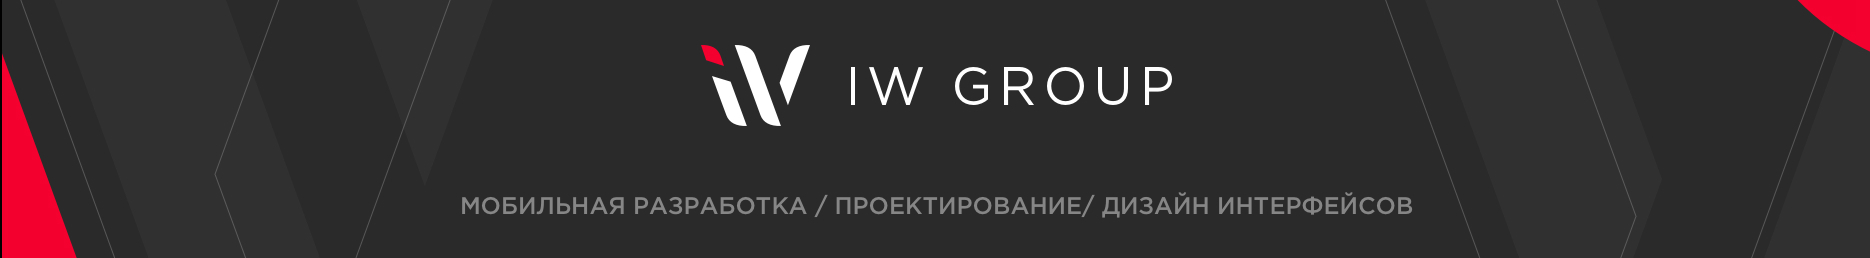 IW Community's profile banner